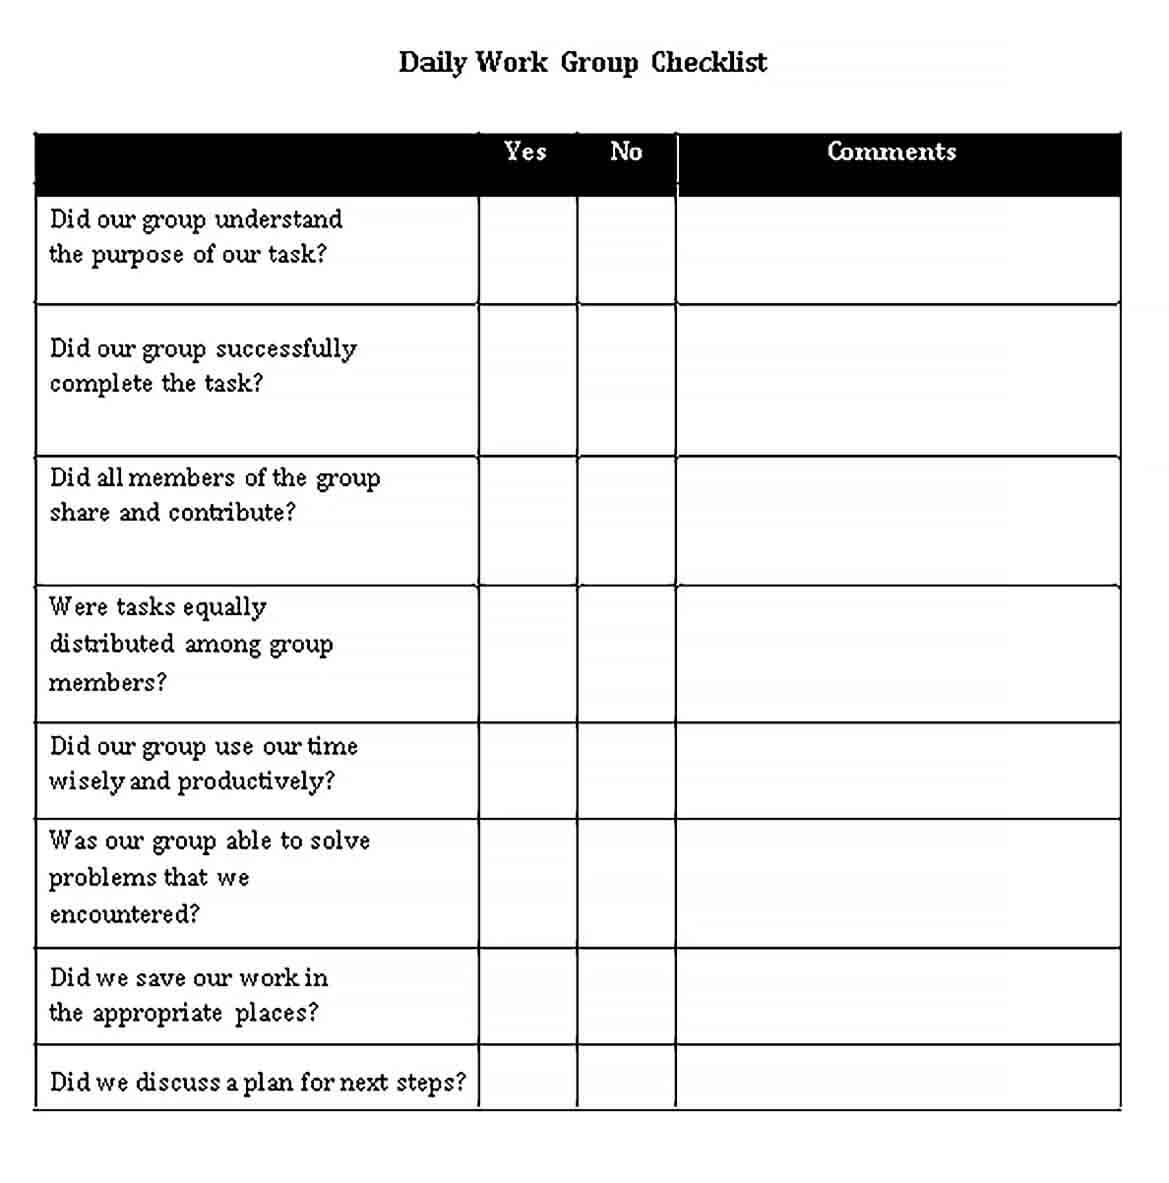 Sample Daily Work Checklist